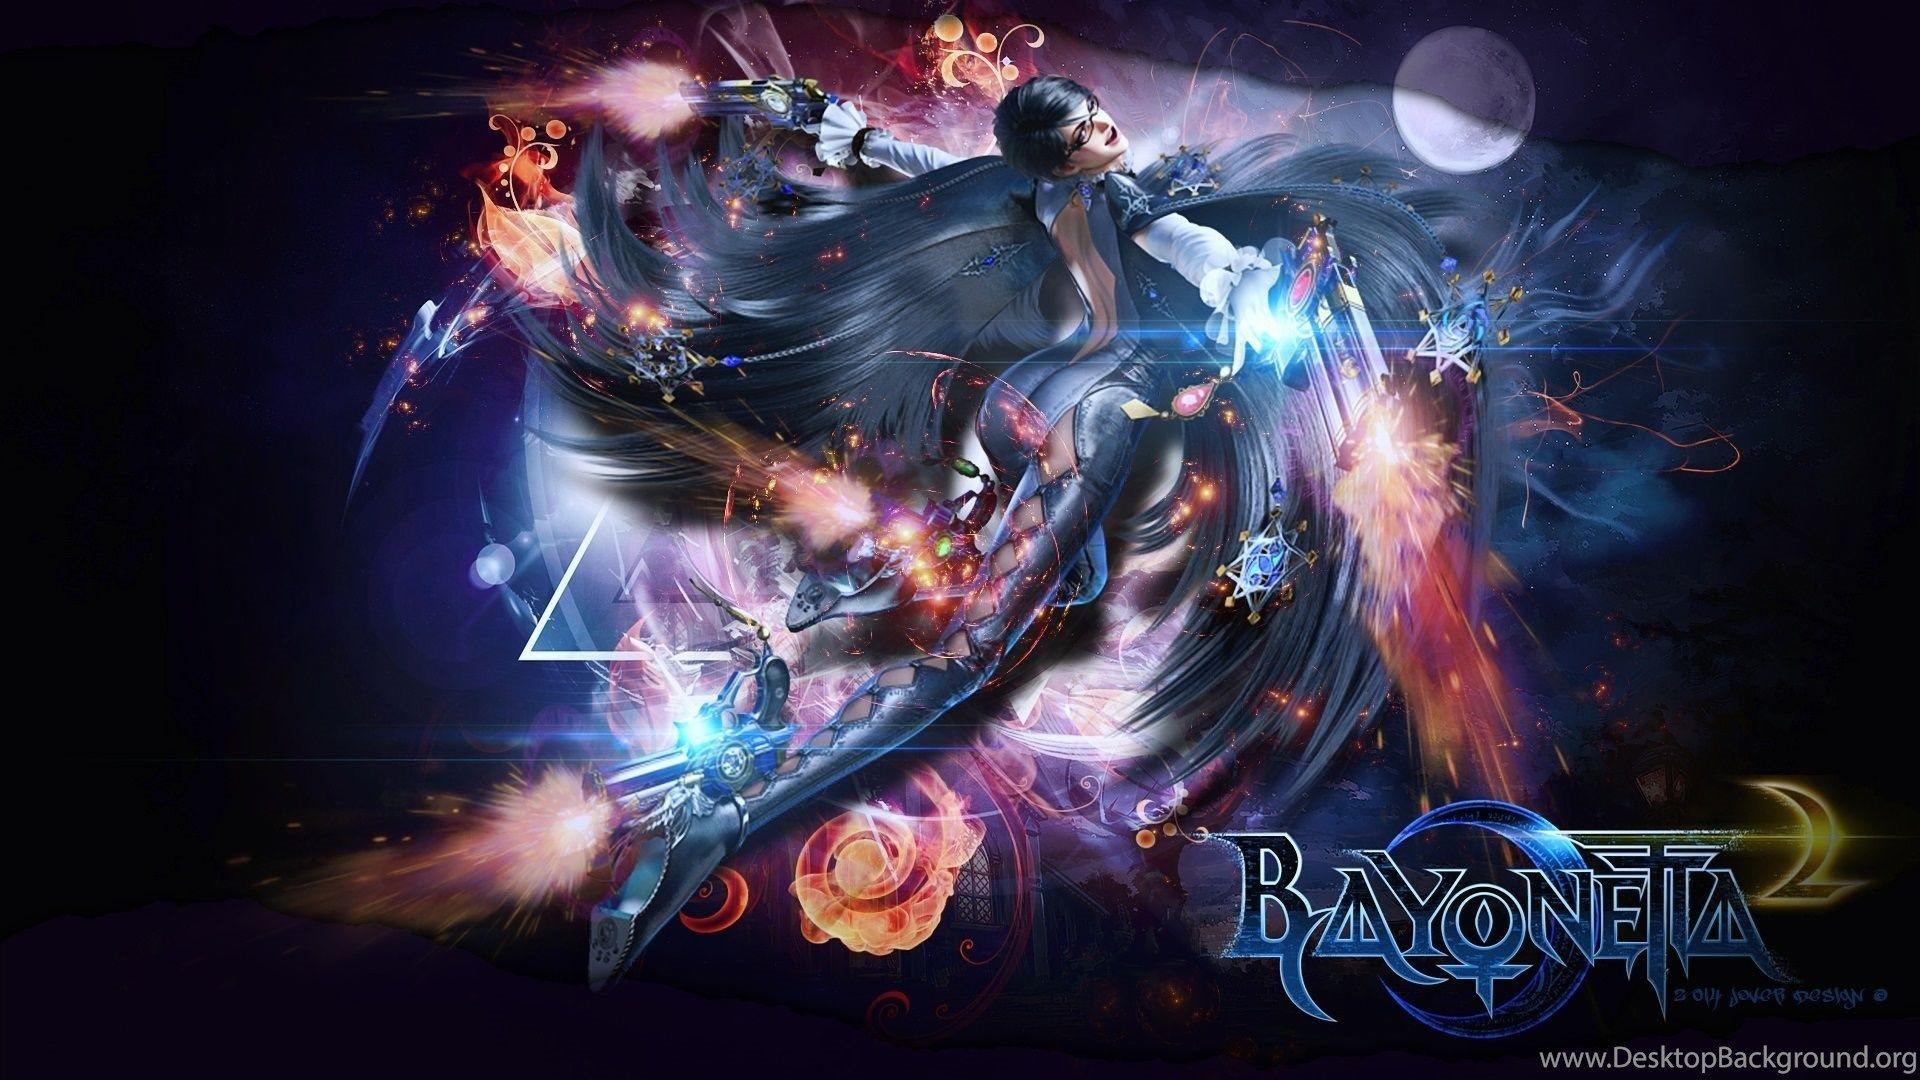 Bayonetta 2 By Jover Design Desktop Background